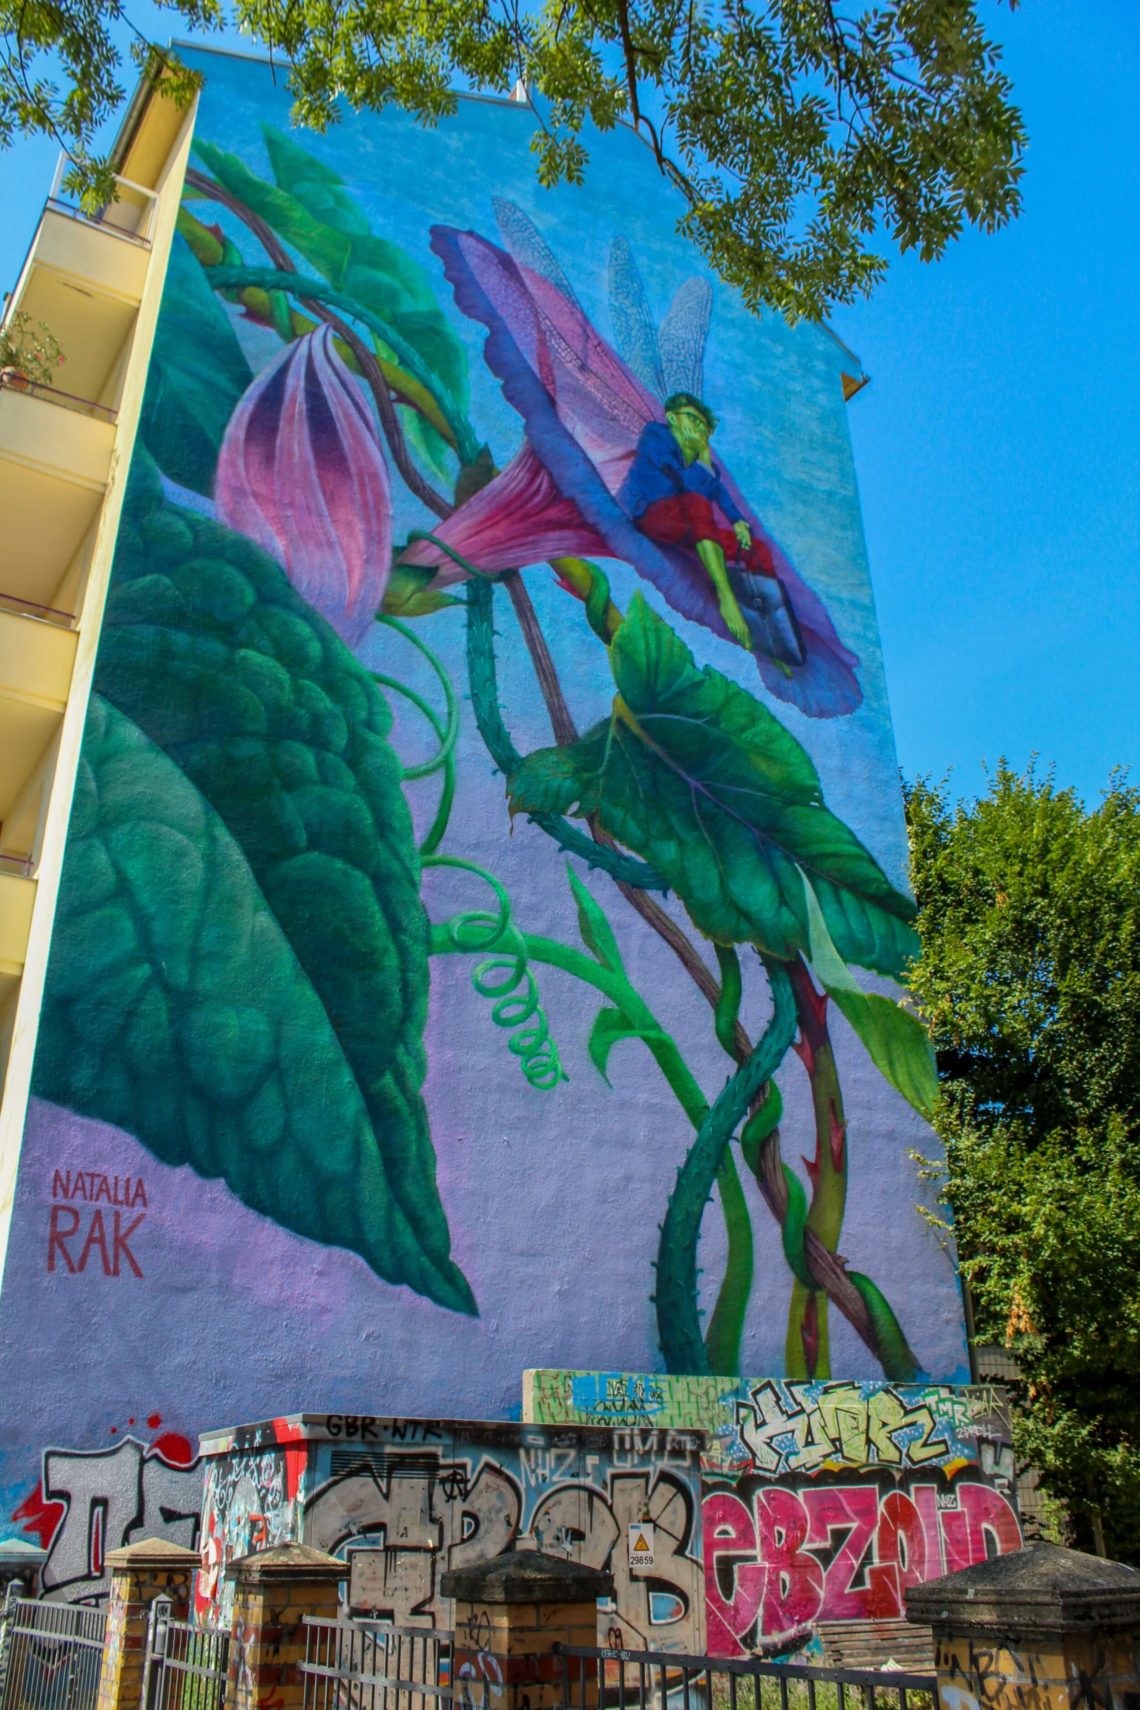 Colourful street art on Berlin's buildings